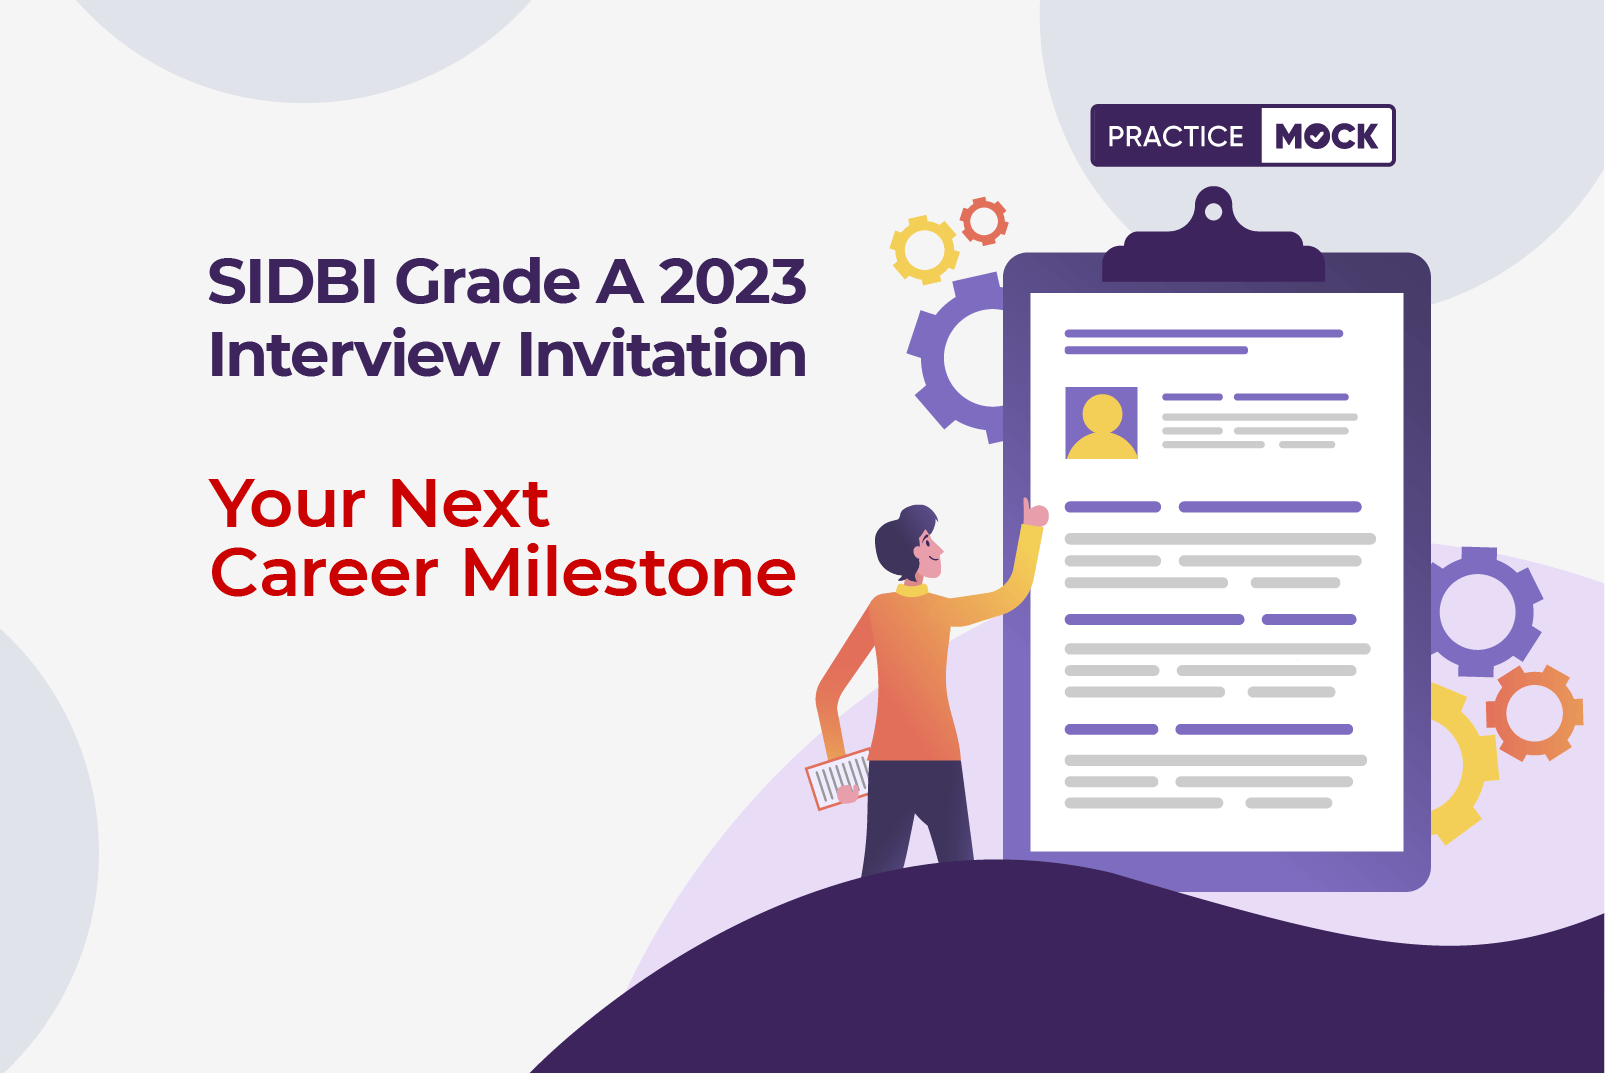 SIDBI Grade A 2023 Interview Invitation: Your Next Career Milestone